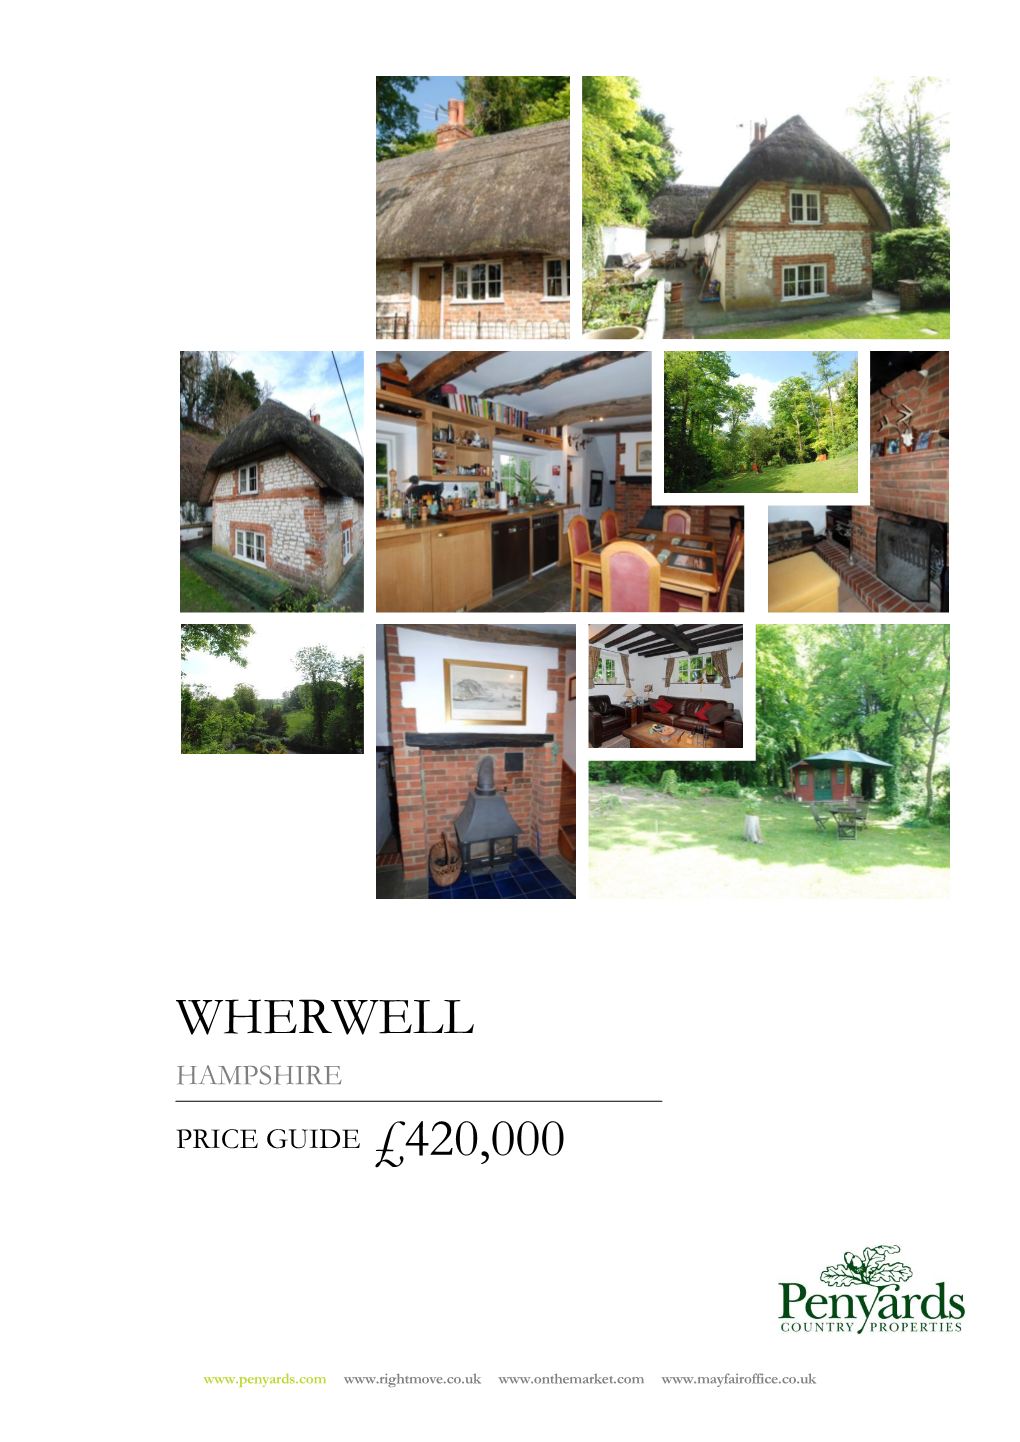 Wherwell Hampshire Price Guide £420,000